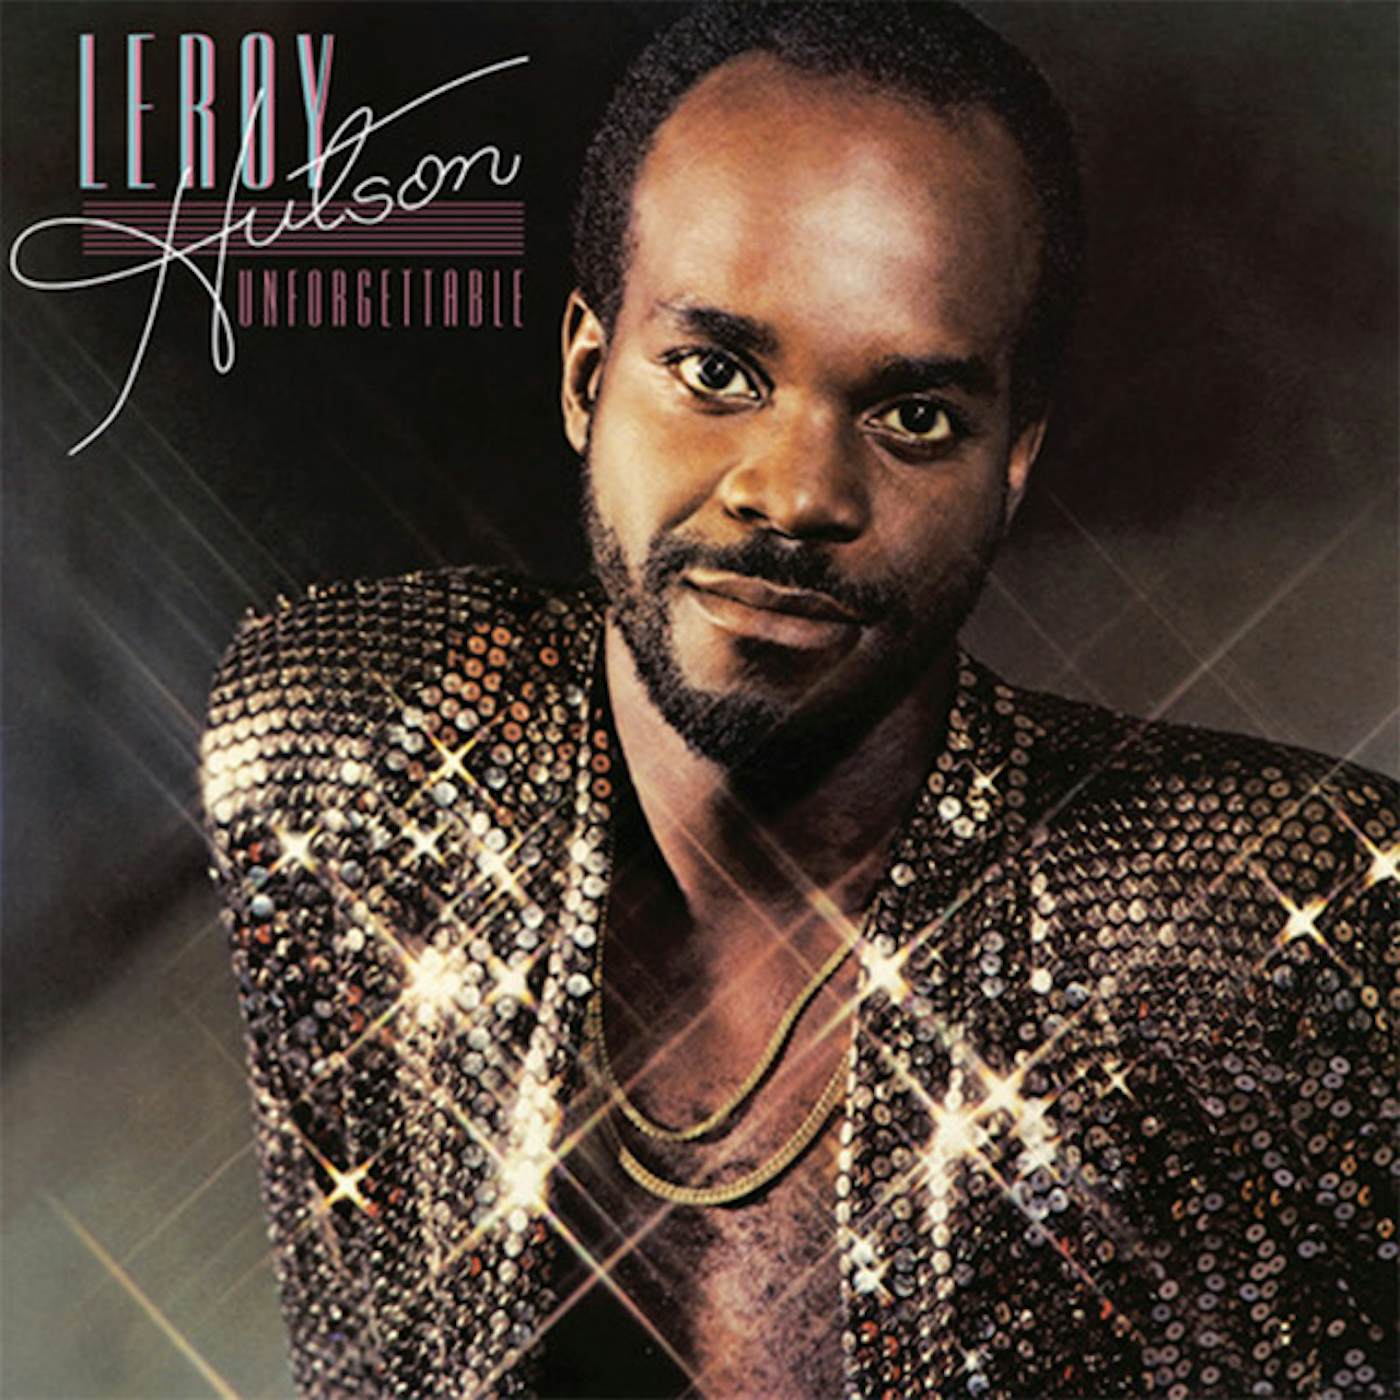 Leroy Hutson Unforgettable Vinyl Record